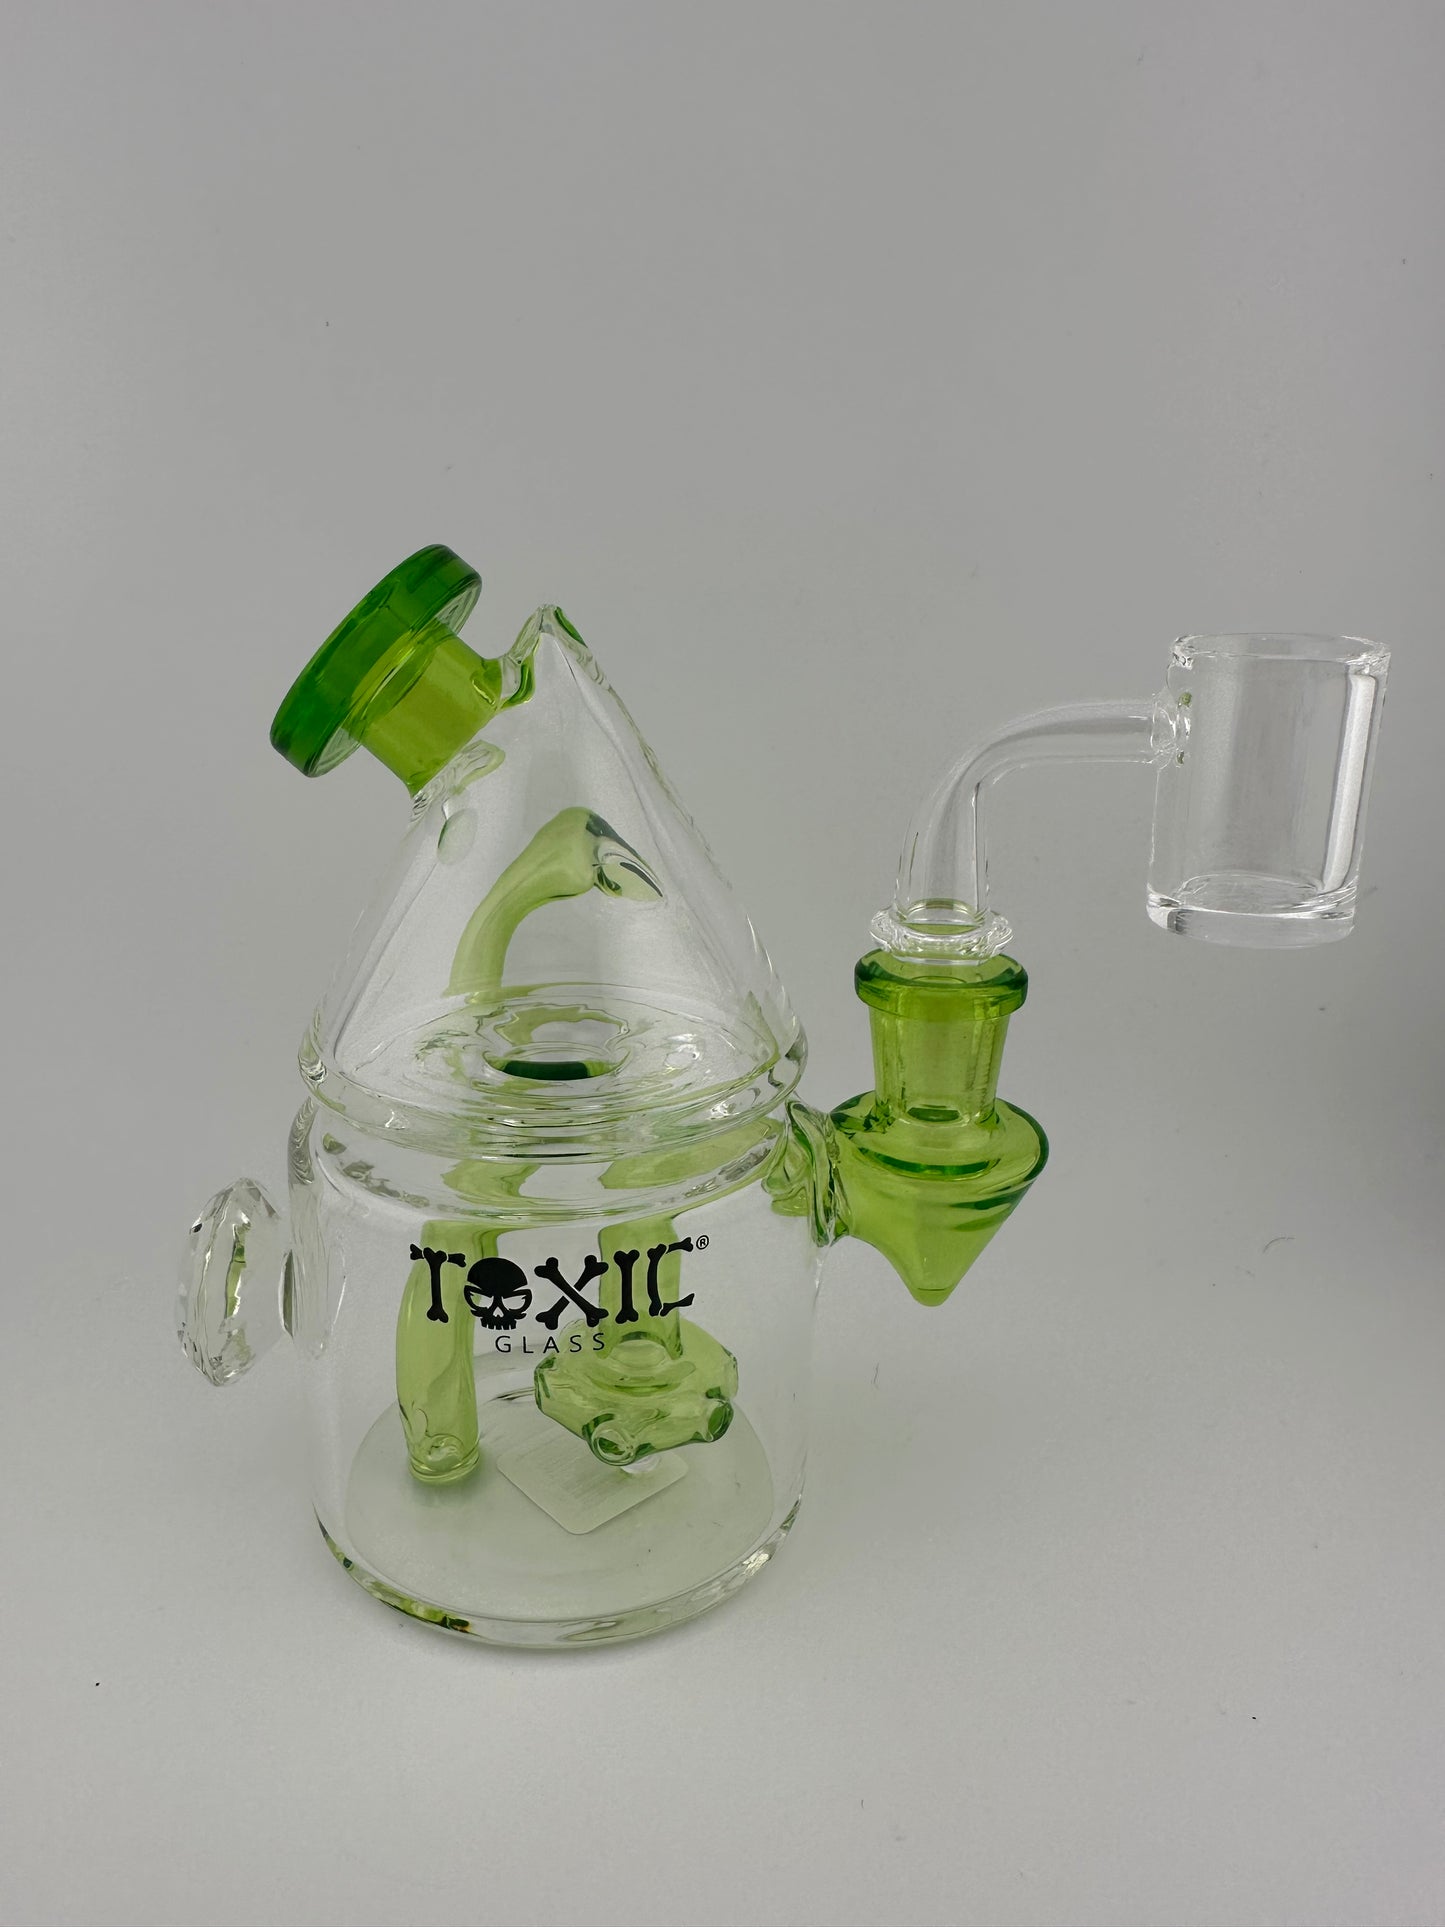 Toxic Glass Cone Recycler Diamond Rig